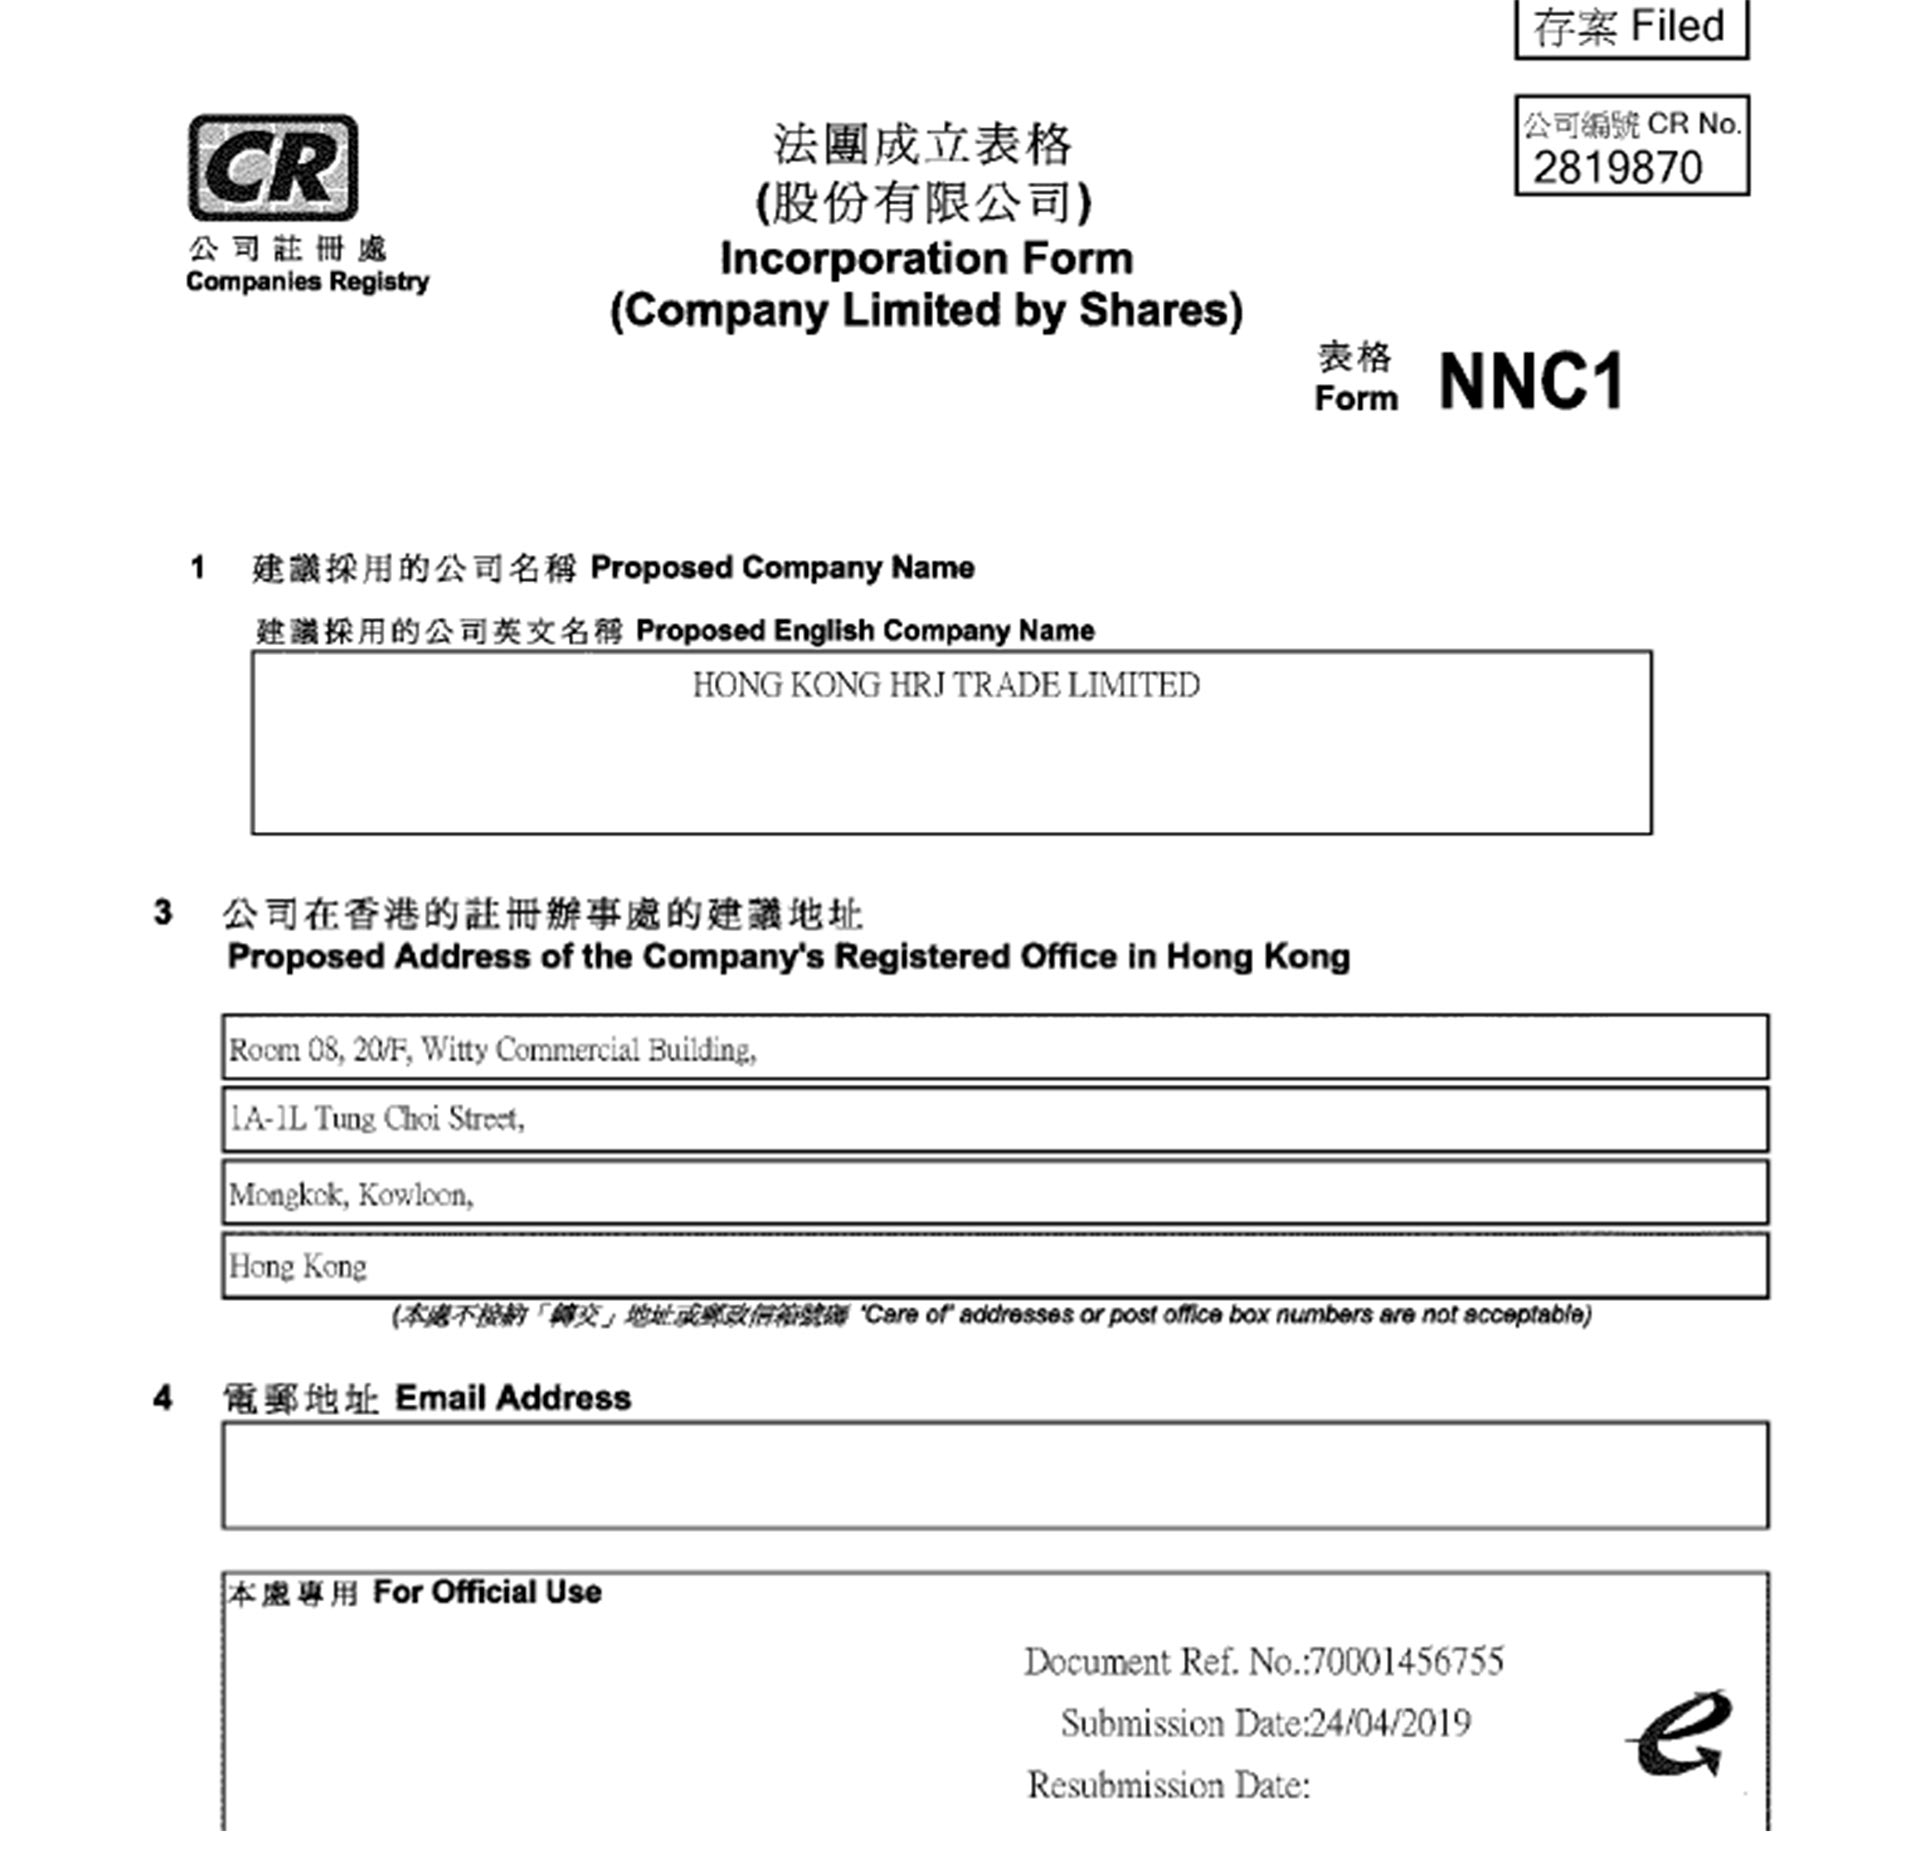 El certificado de registro de Hong Kong HRJ Trade Ltd, inscripta en abril de 2019, la empresa que figura como emisora de la facturas truchas a RPB SA